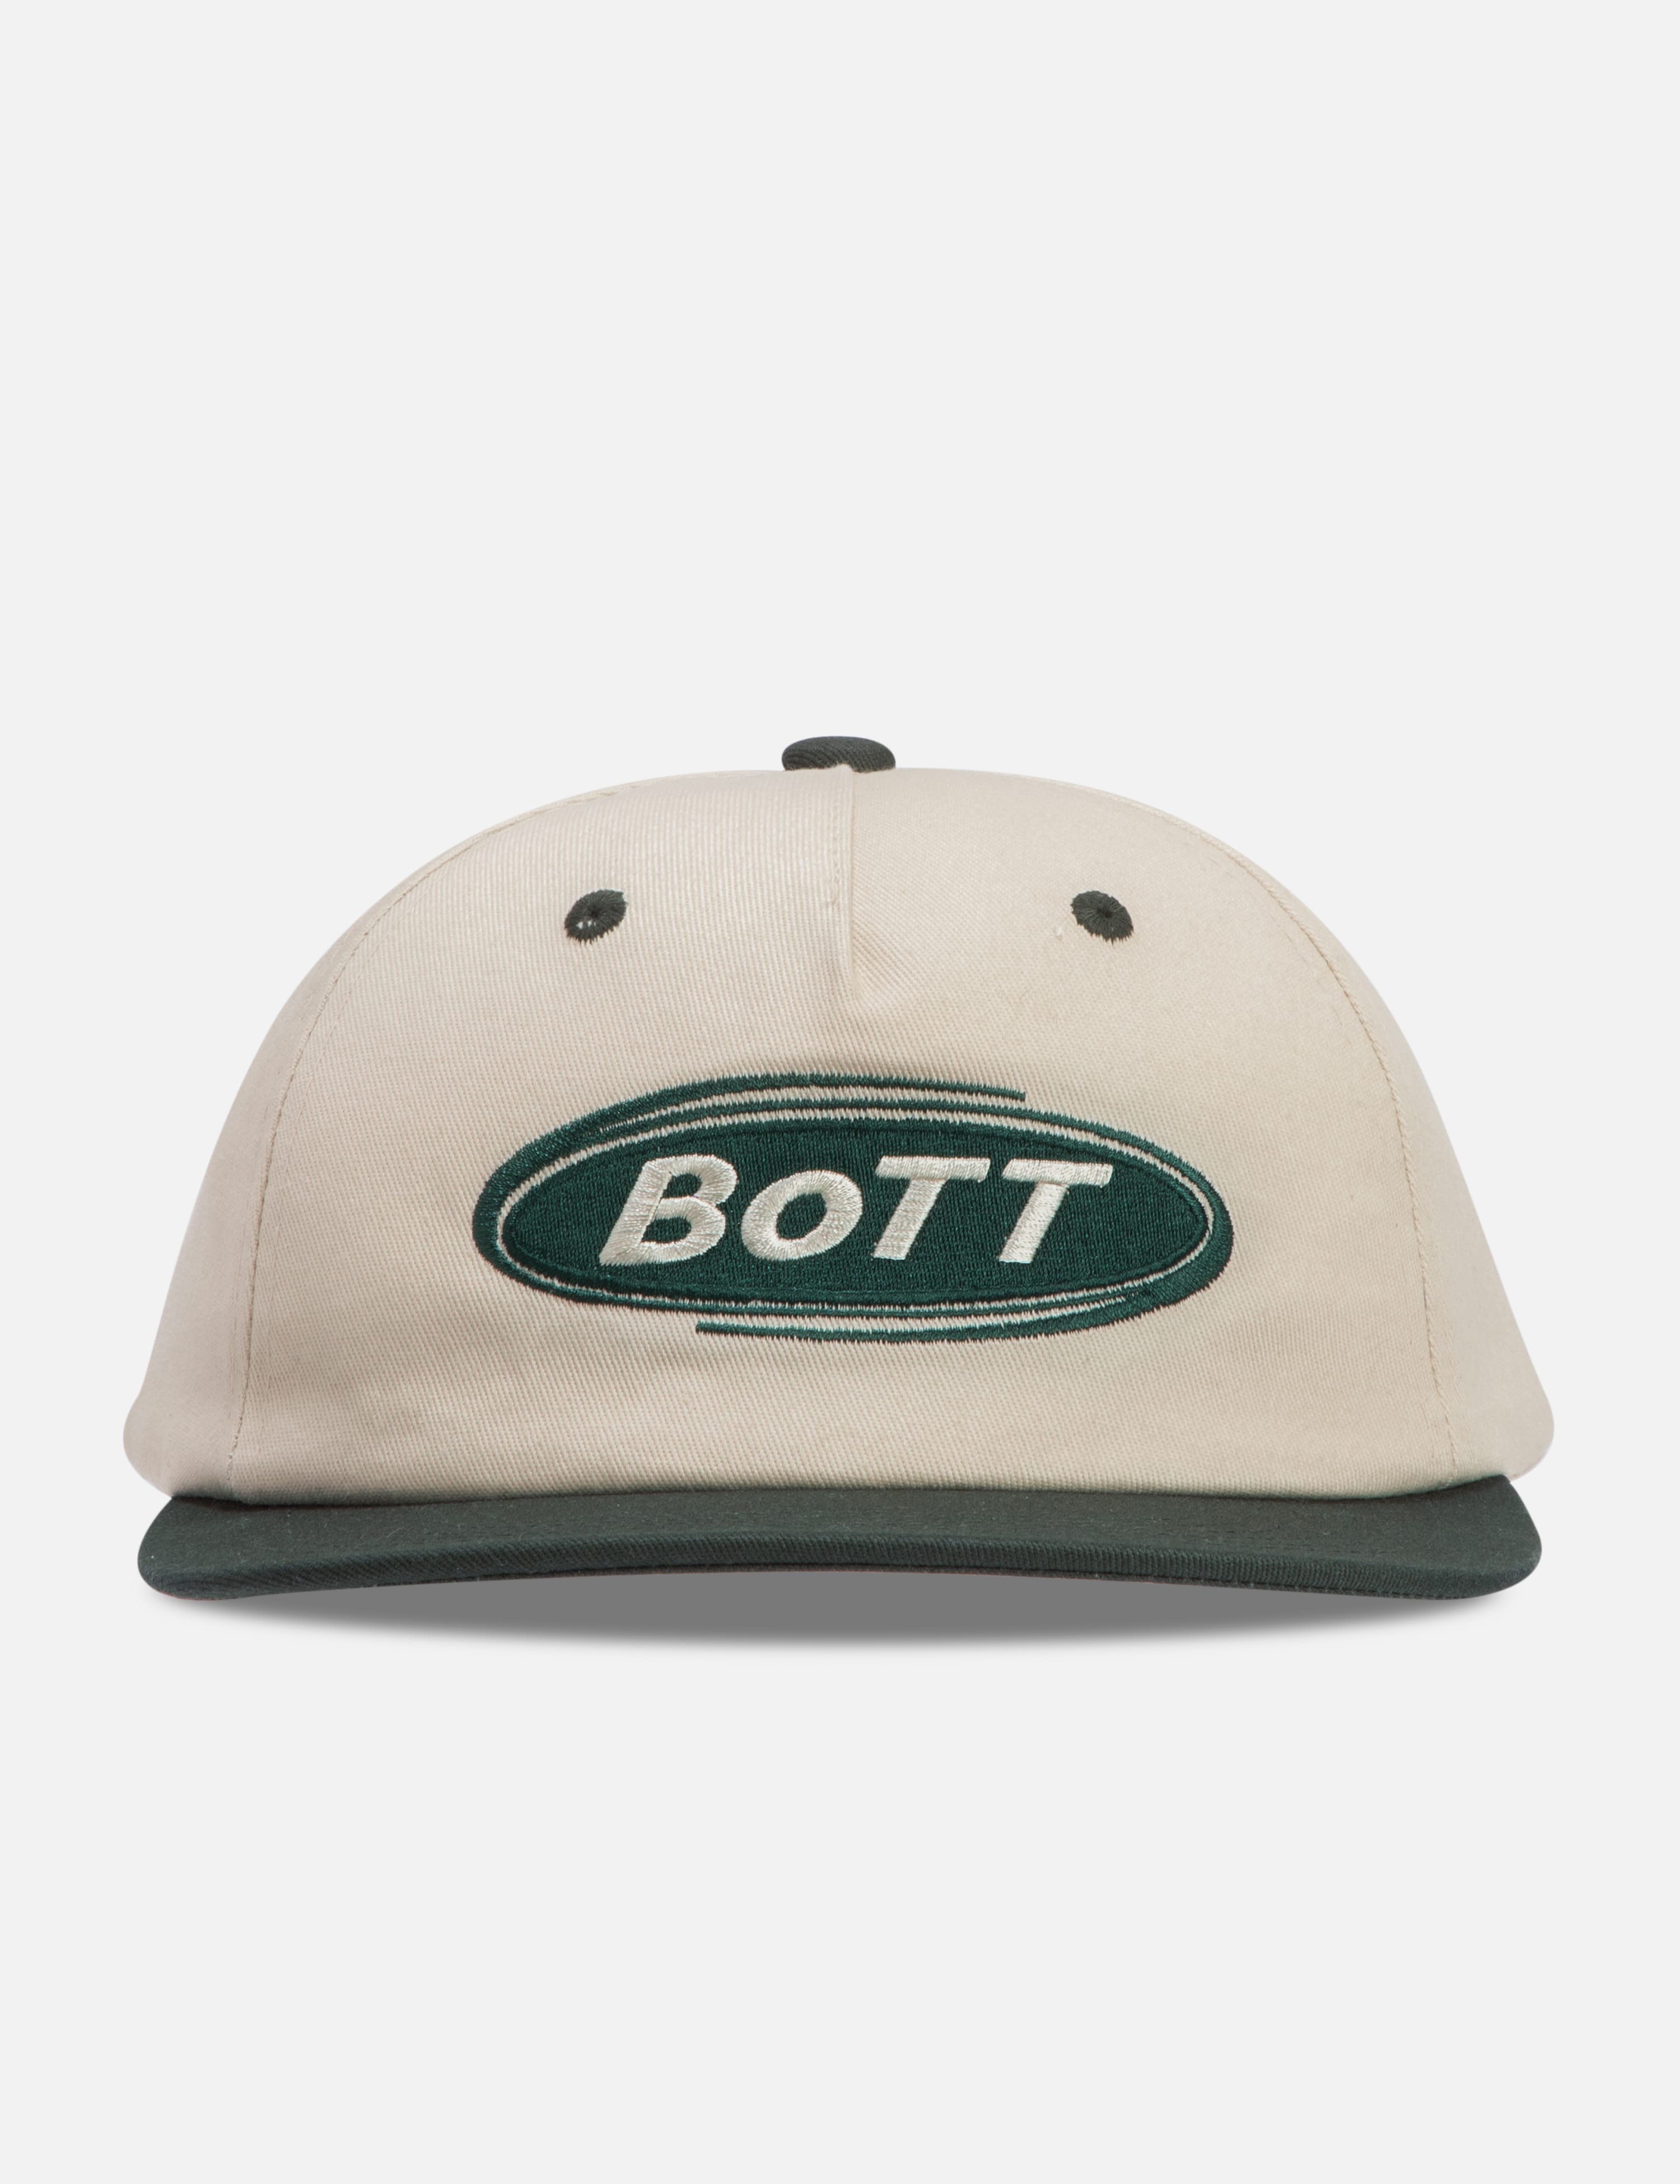 BoTT - Light Logo 5 Panel Cap | HBX - Globally Curated Fashion